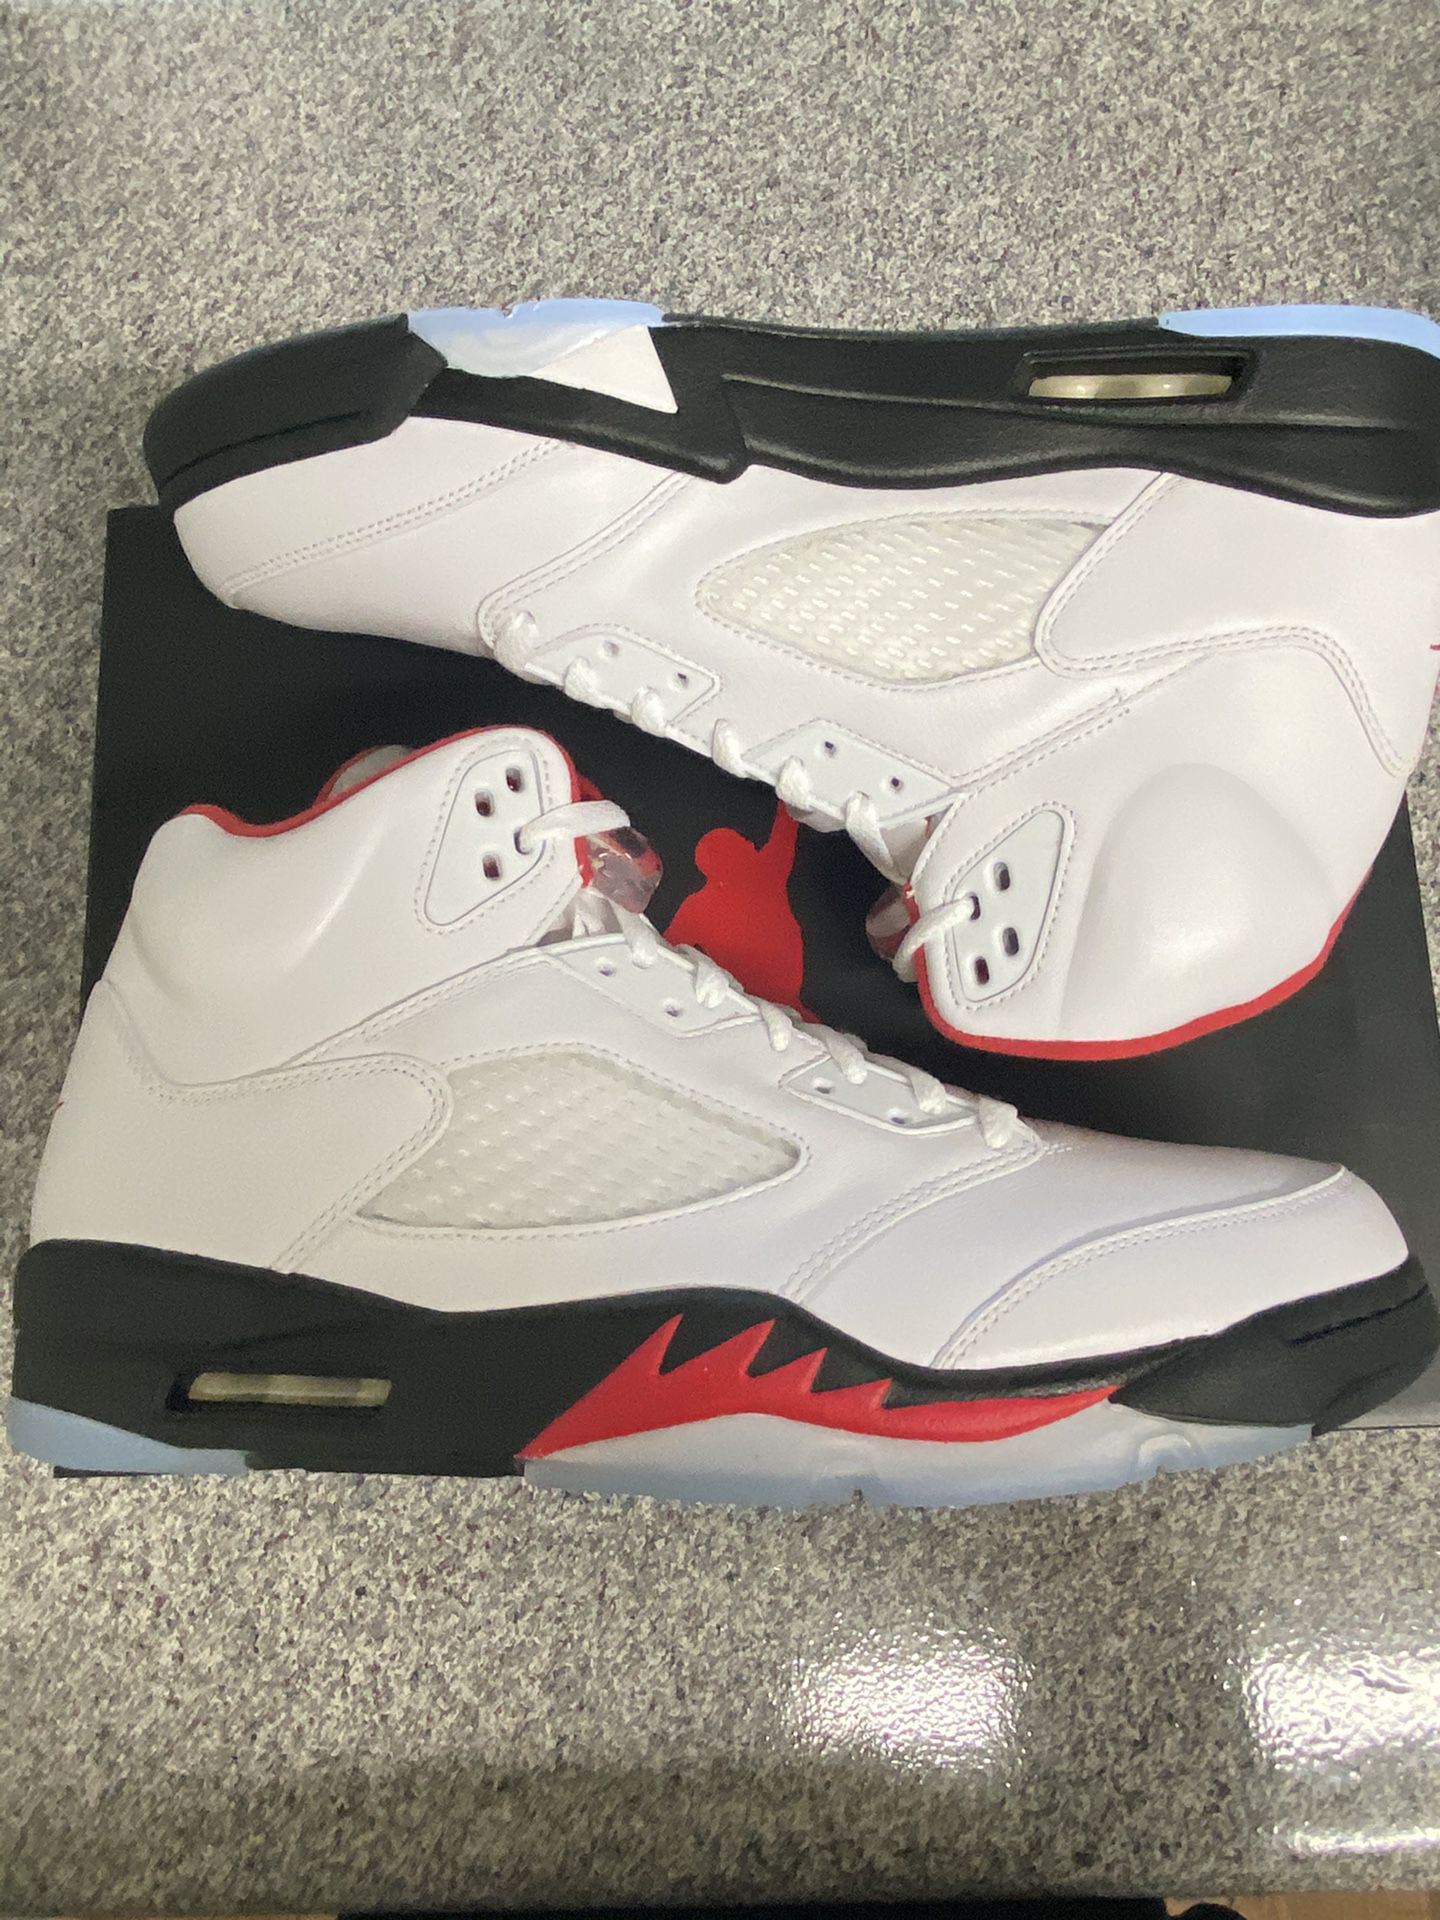 Air Jordan 5 Size 11.5